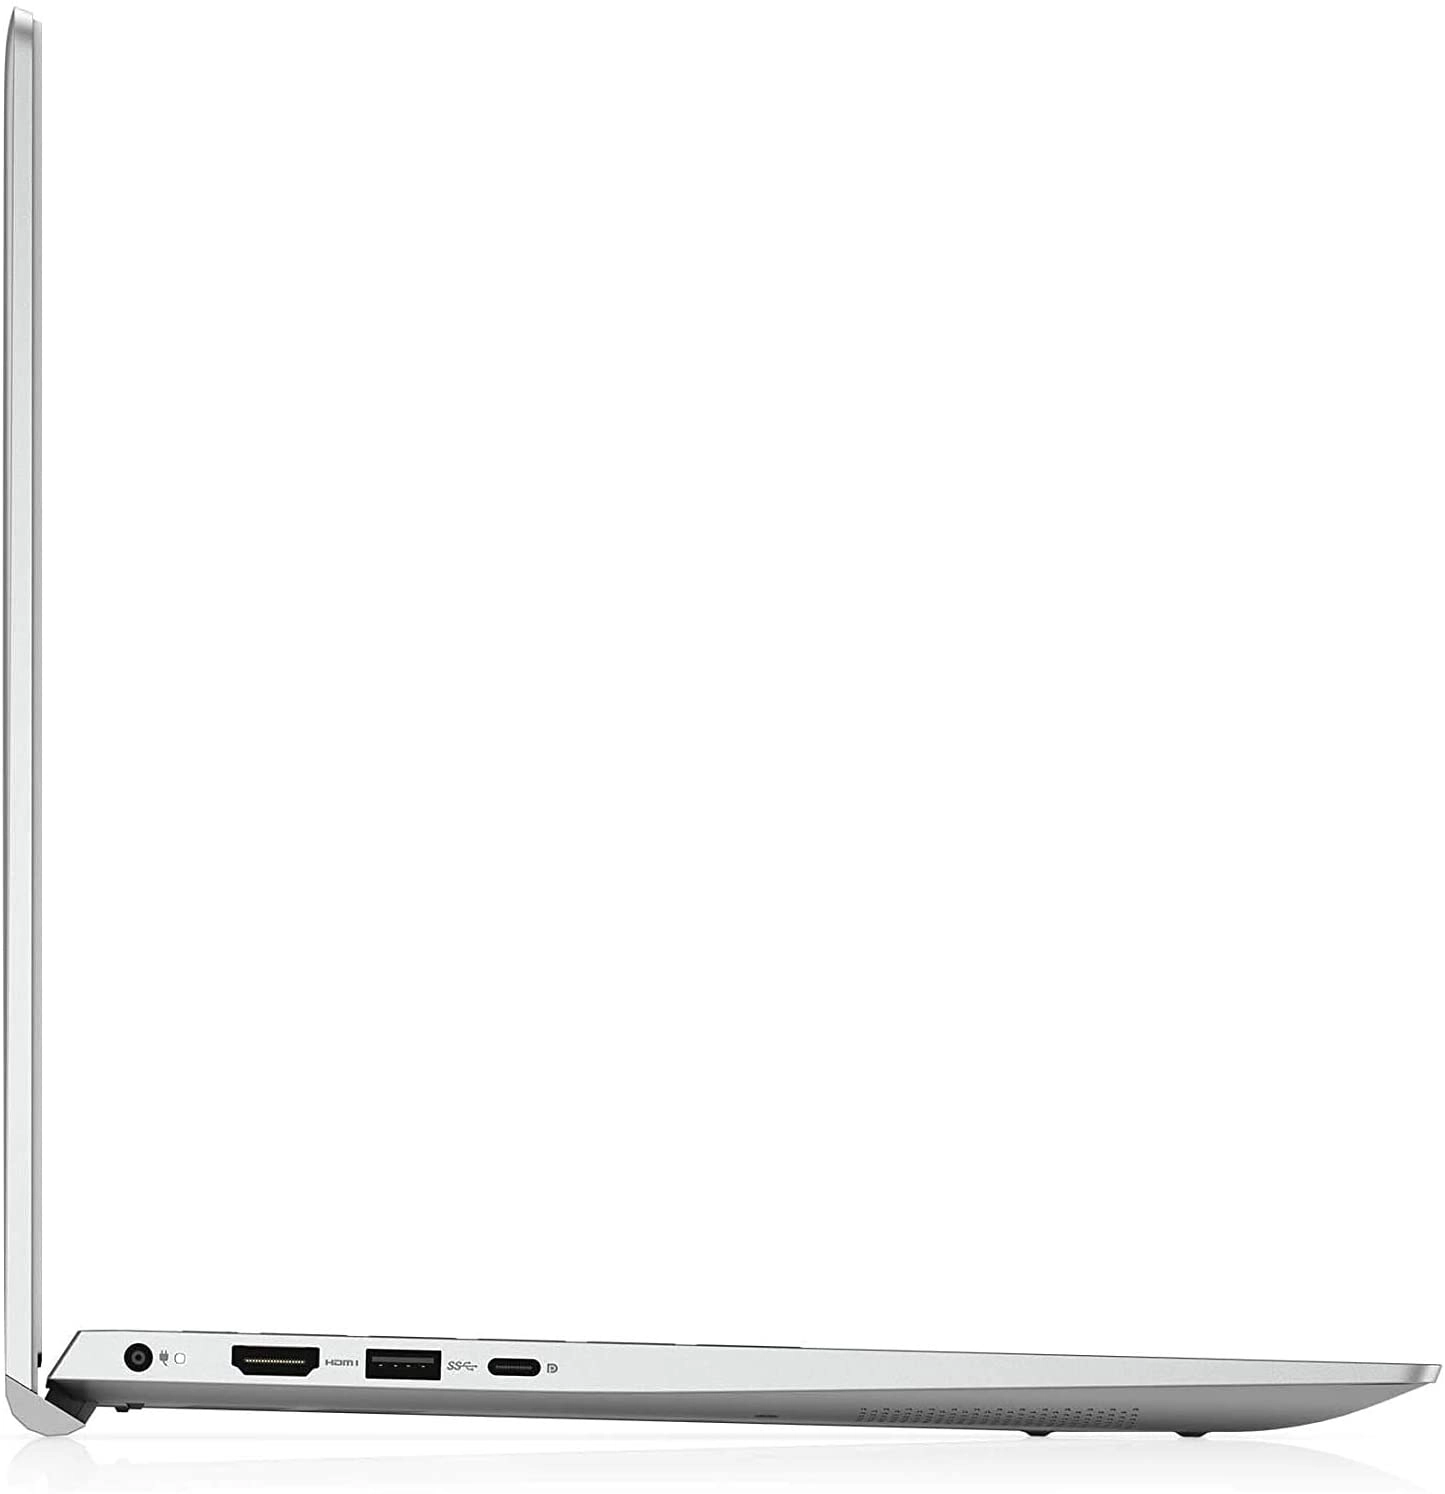 Dell 15 5000 i7 laptop image